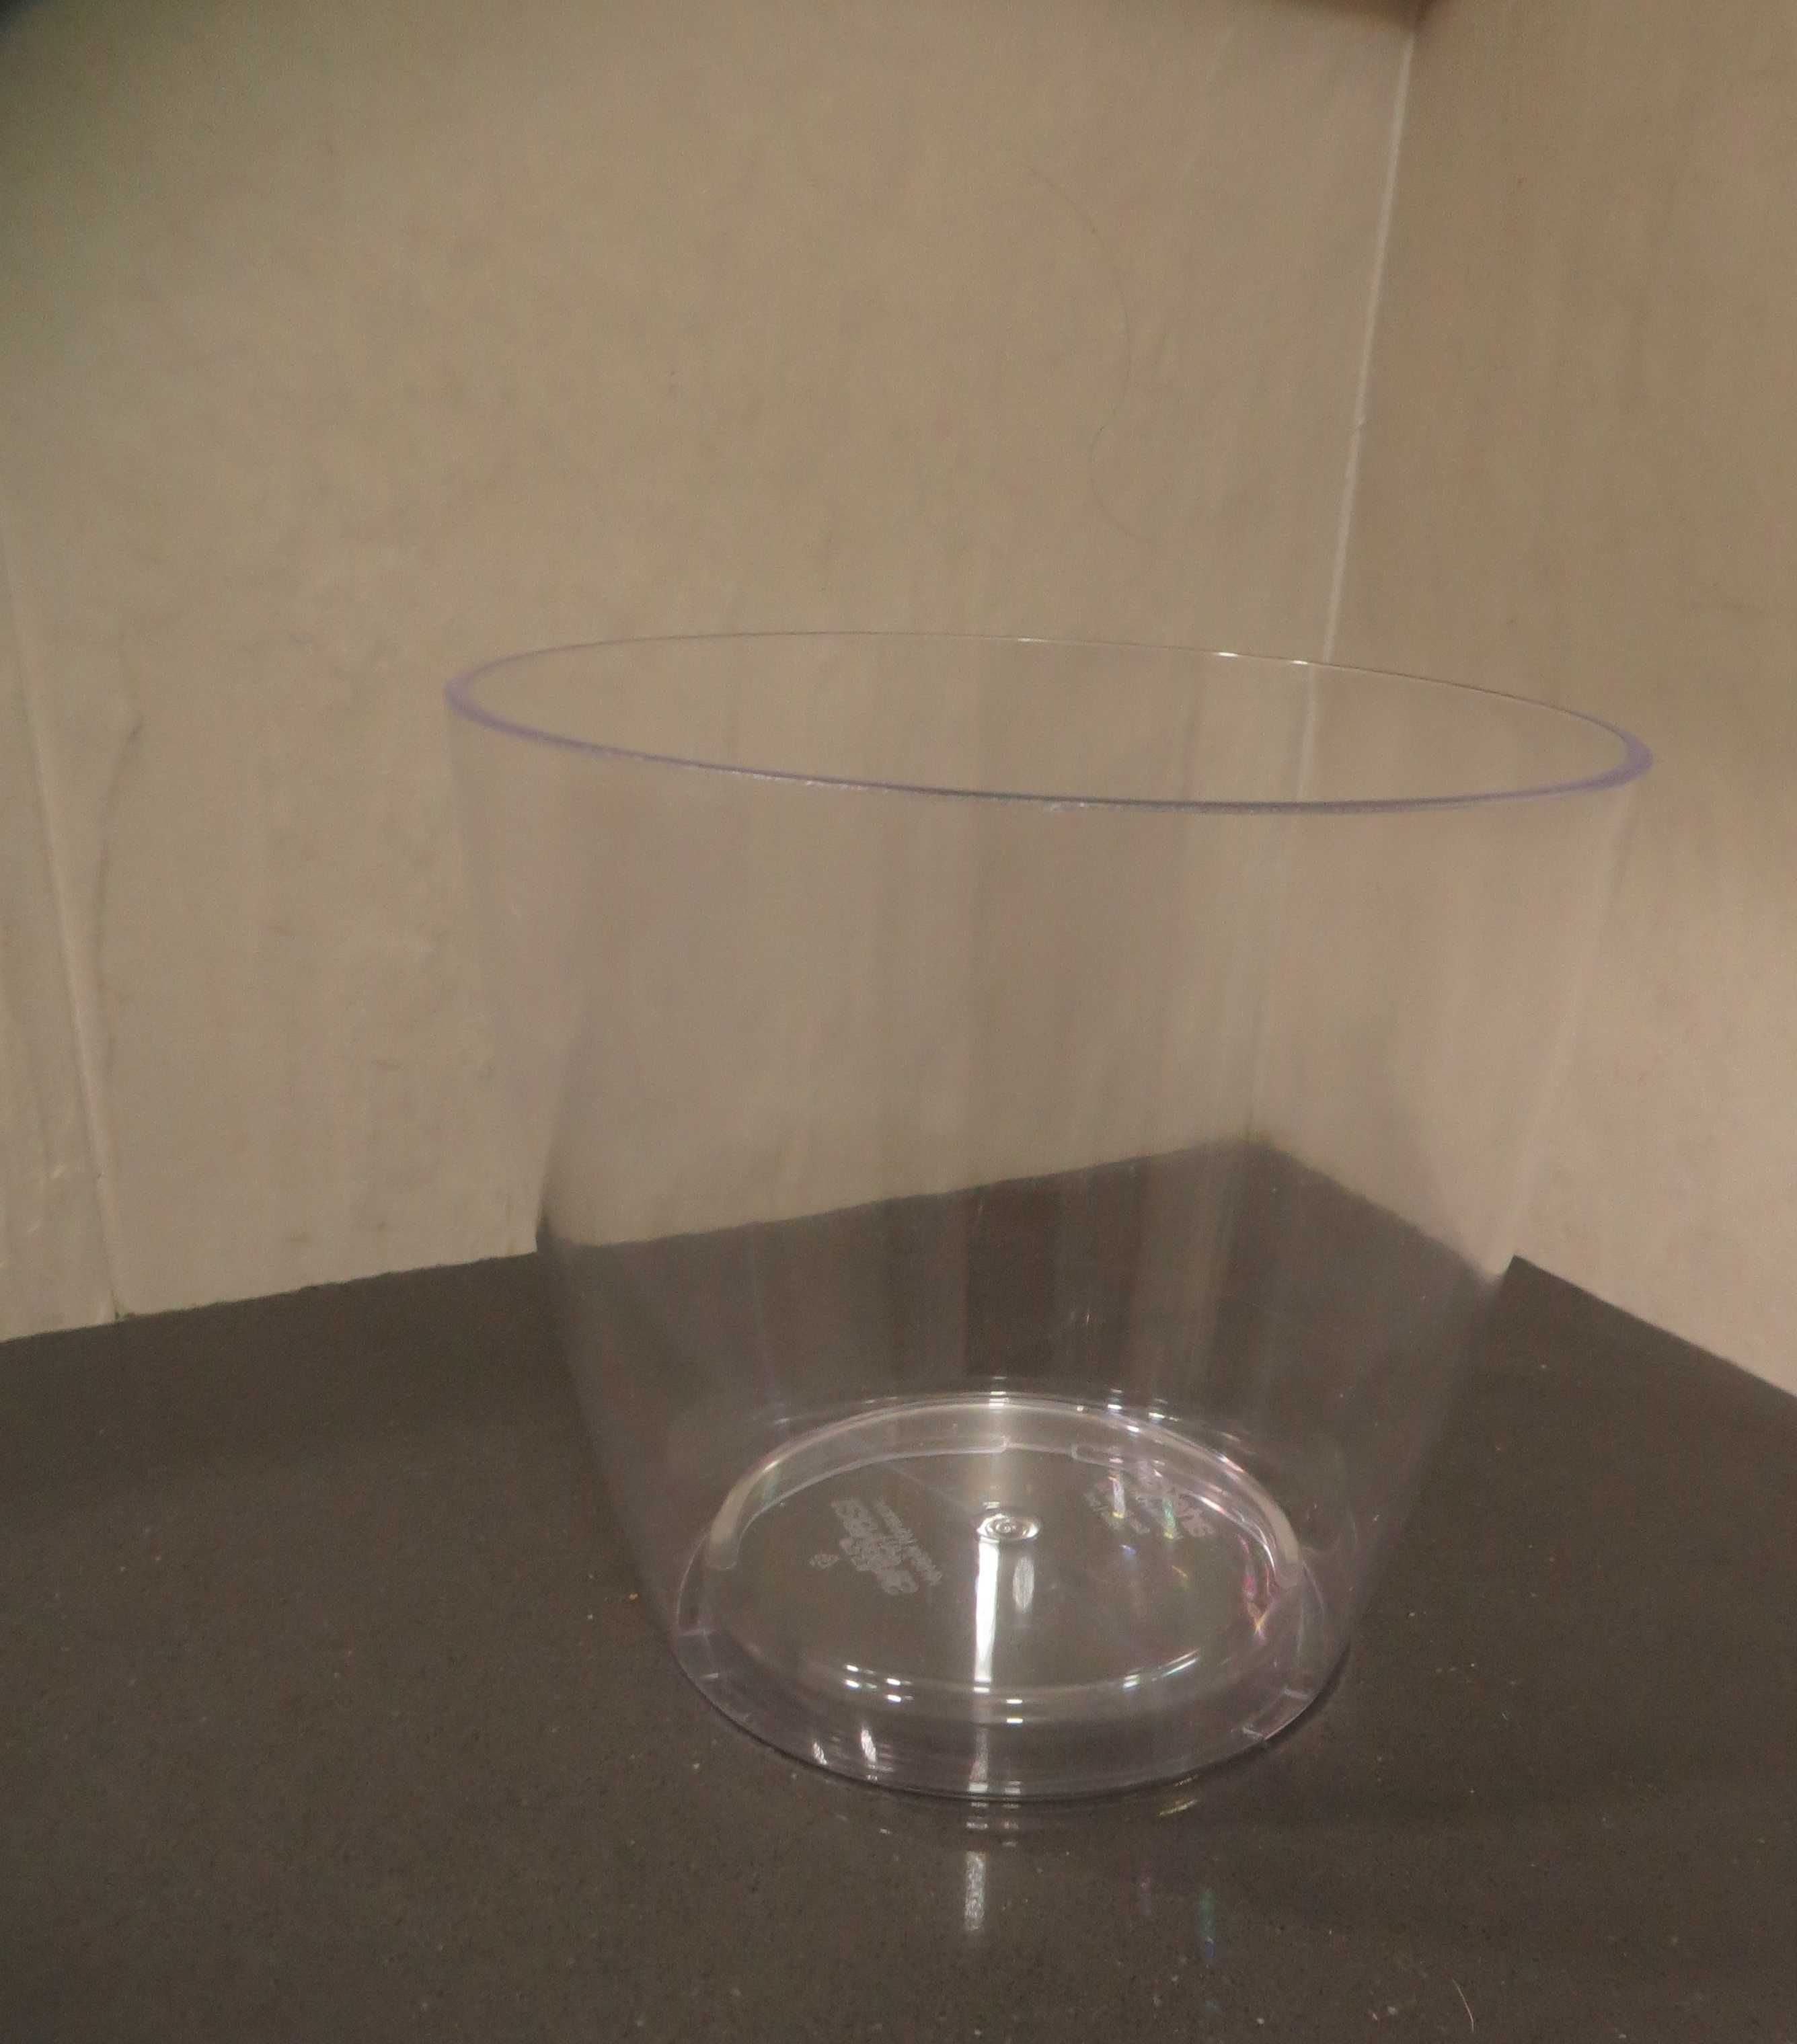 Vasos Plantas, Ecológico, transparente, 2 litros -Lote 3  - Novos